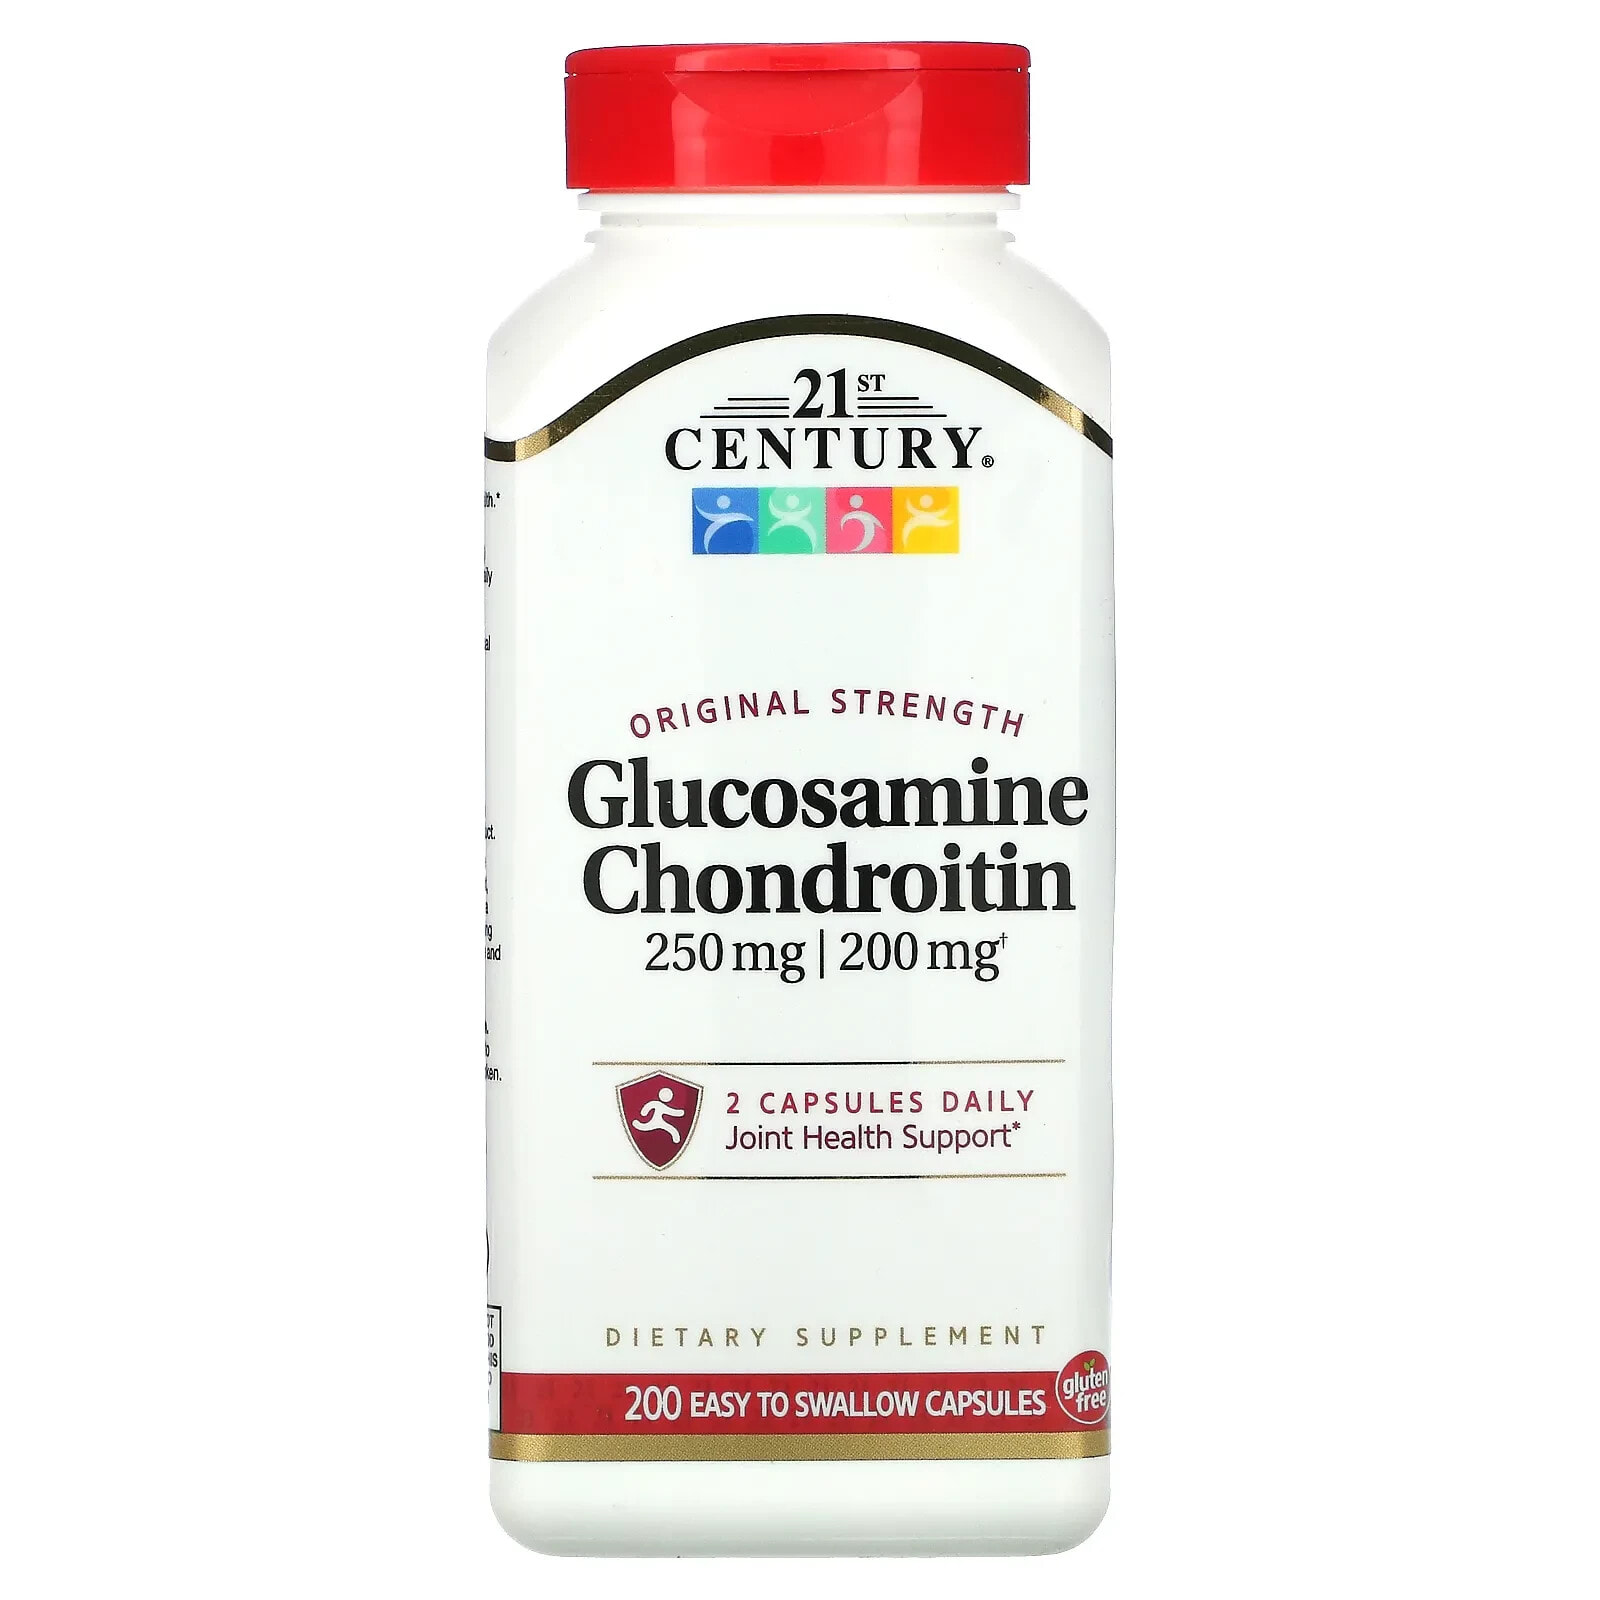 Glucosamine / Chondroitin, Original Strength, 200 Easy to Swallow Capsules